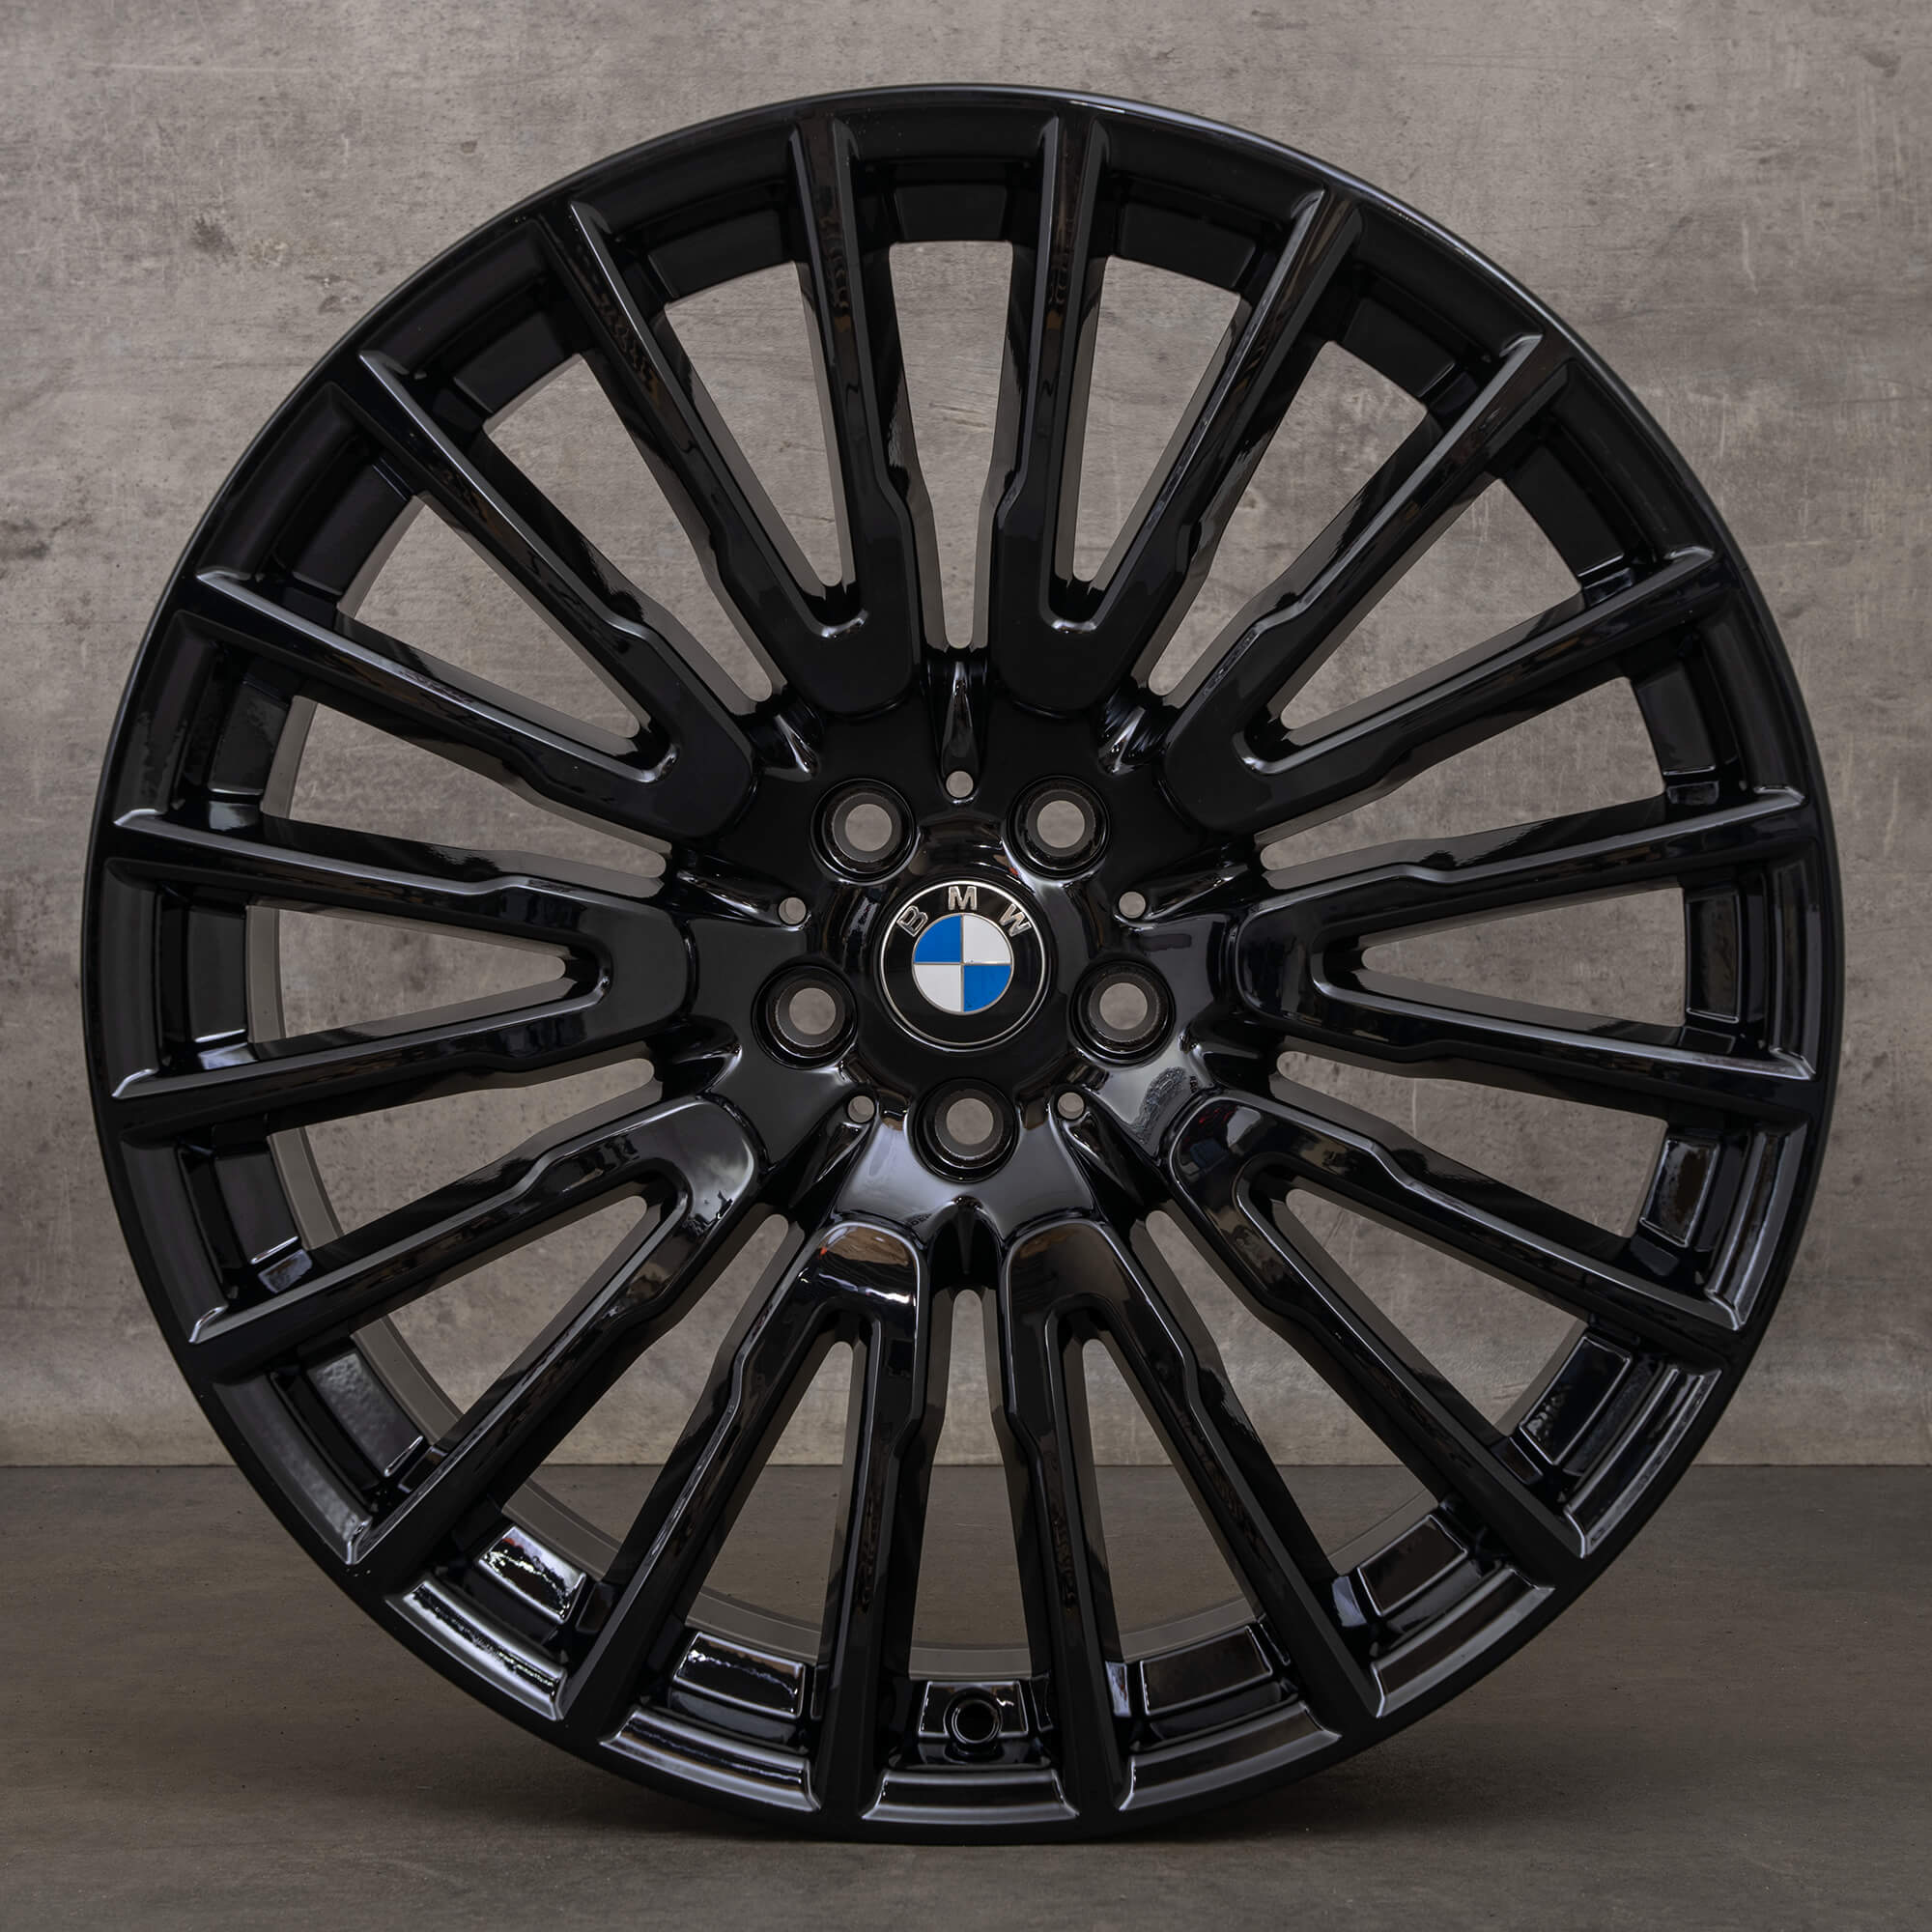 Cerchi BMW Serie 6 GT G32 7 G11 G12 da 21 pollici styling cerchi in alluminio